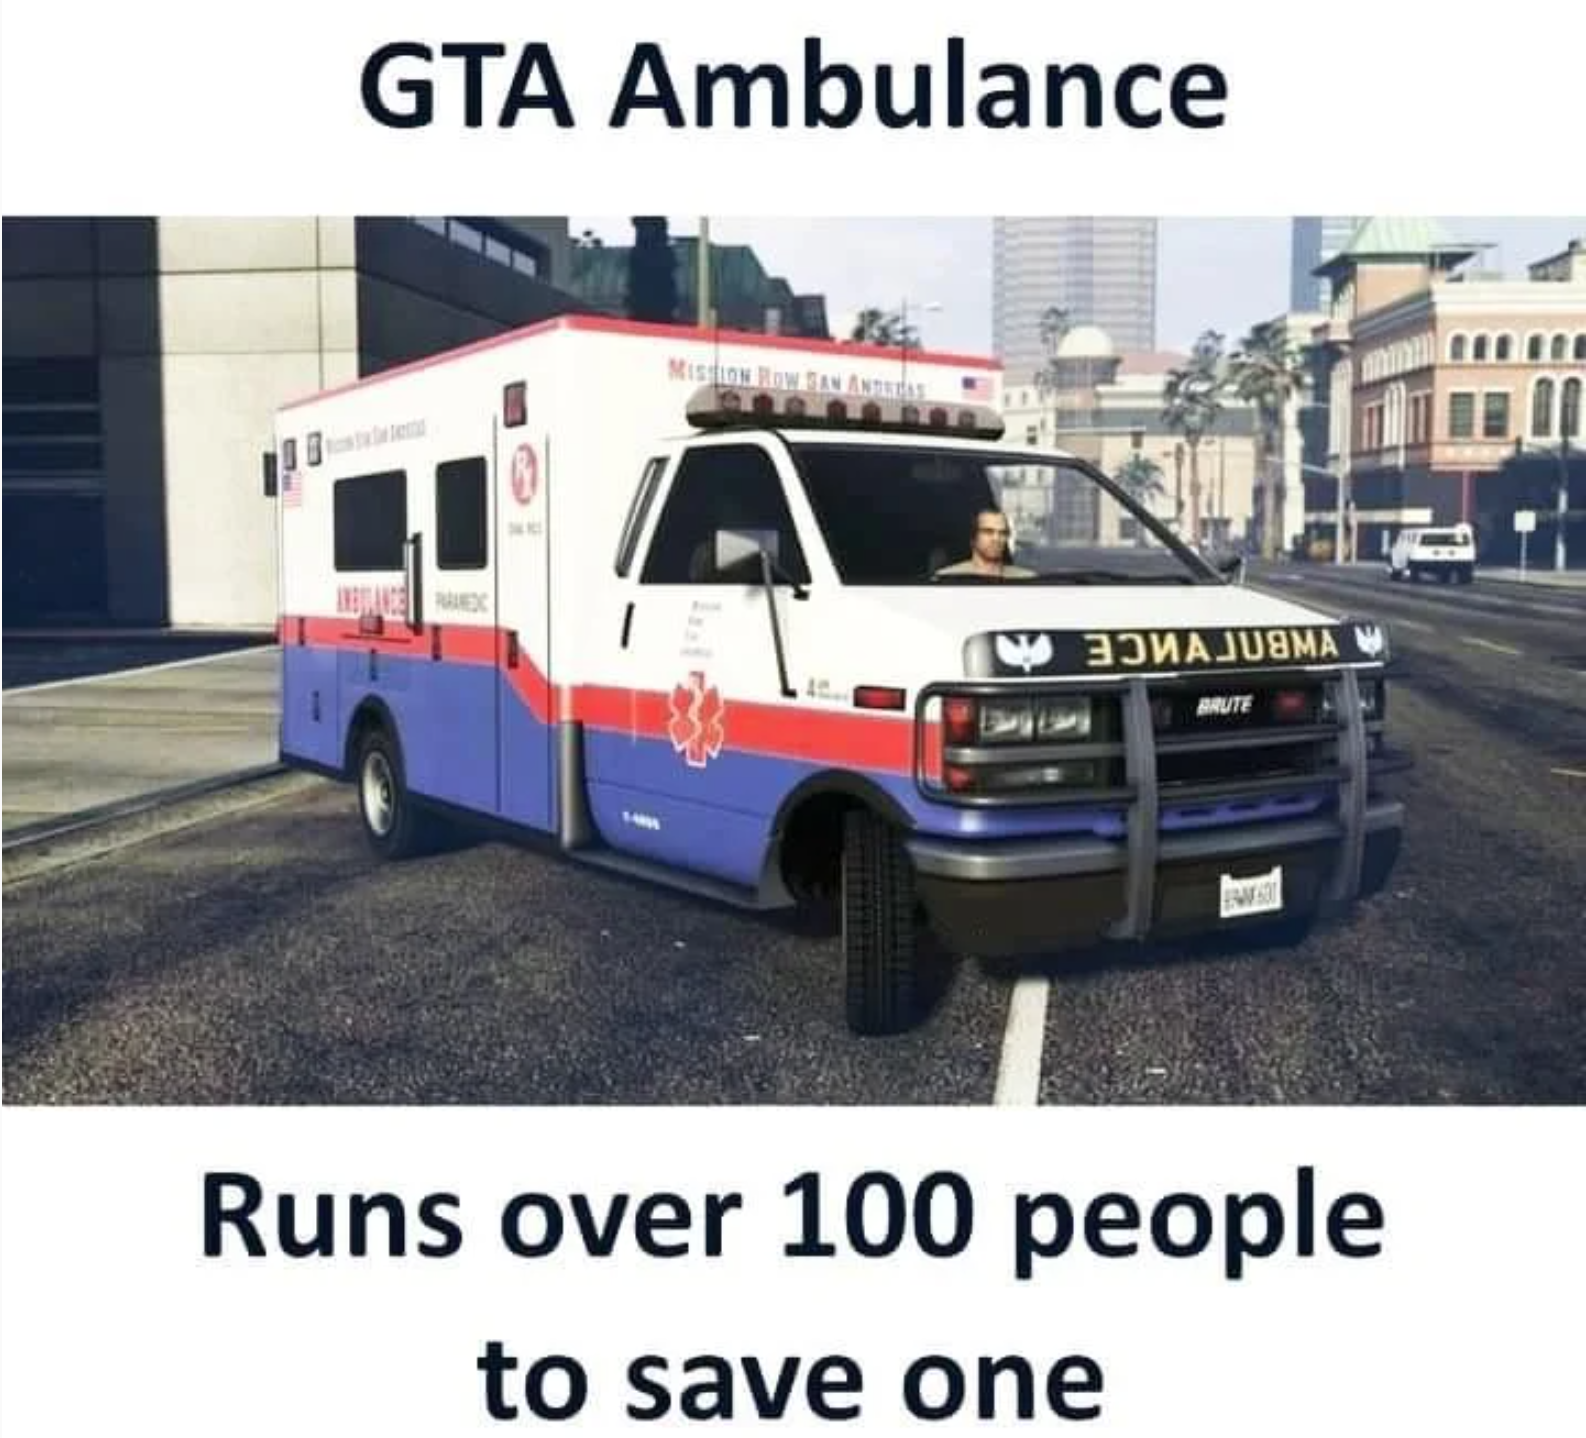 funny gaming memes - car - Gta Ambulance 35WAJUOMA Tu Runs over 100 people to save one